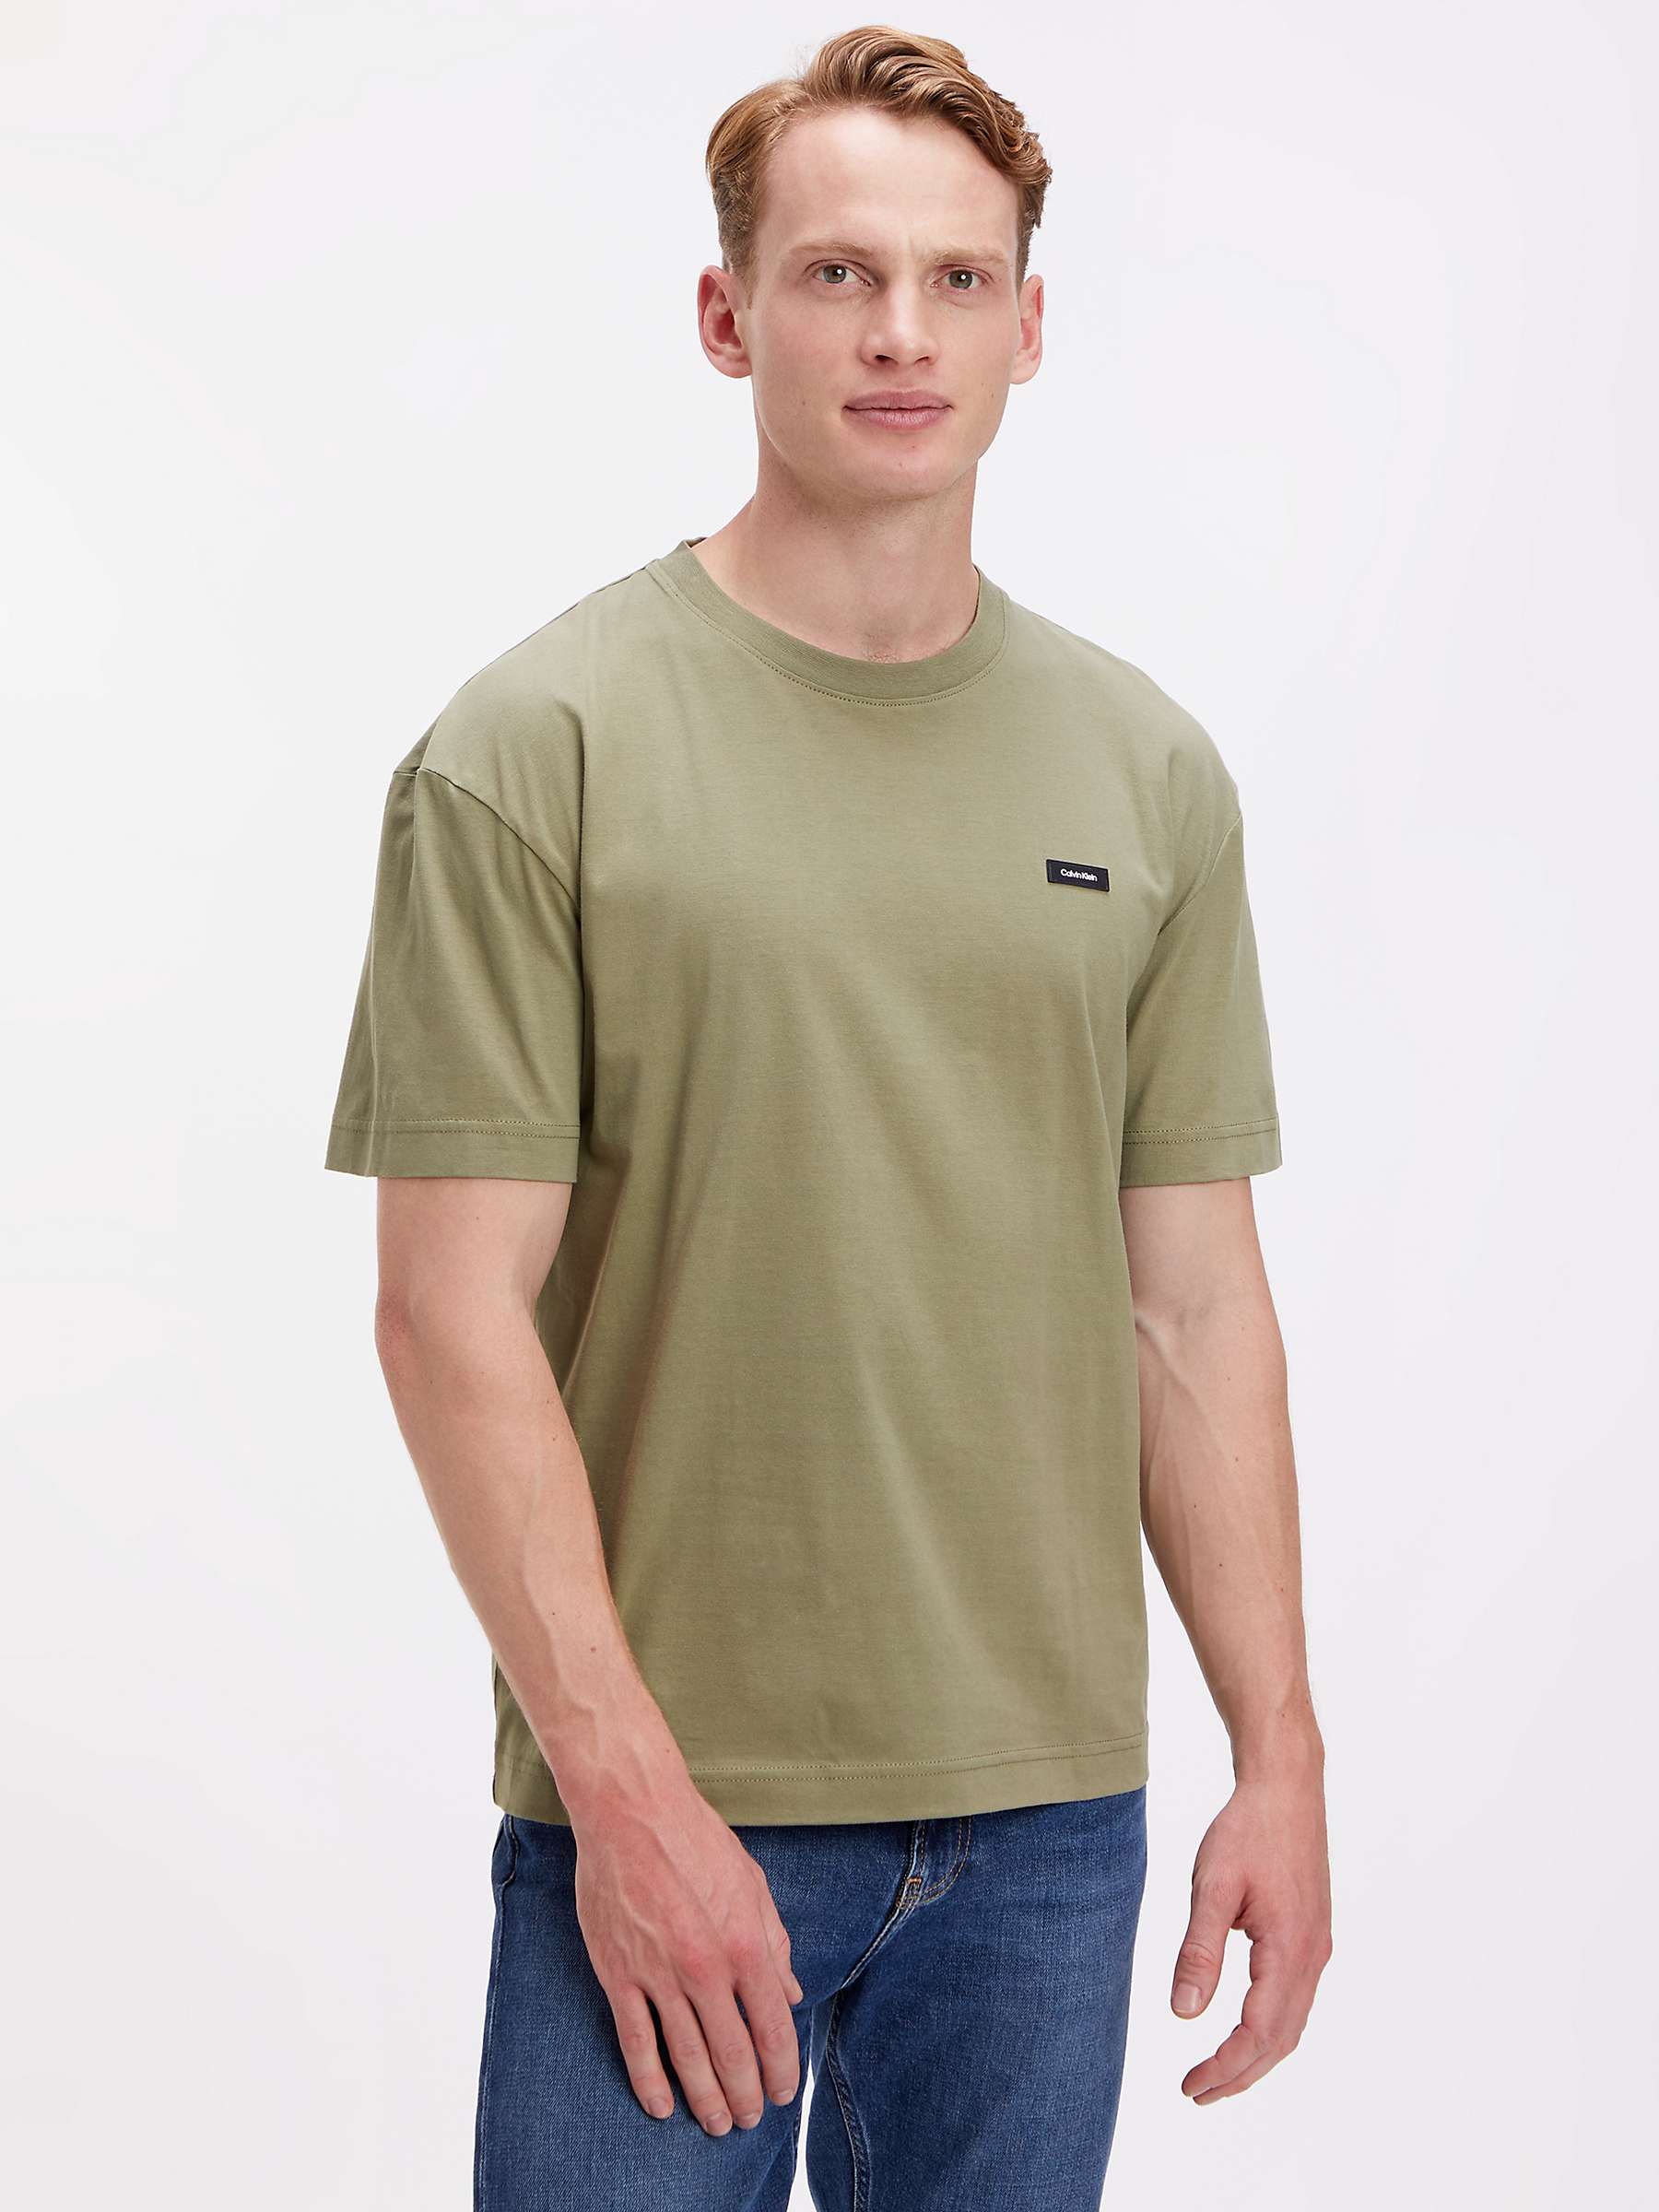 Buy Calvin Klein Comfort T-Shirt Online at johnlewis.com